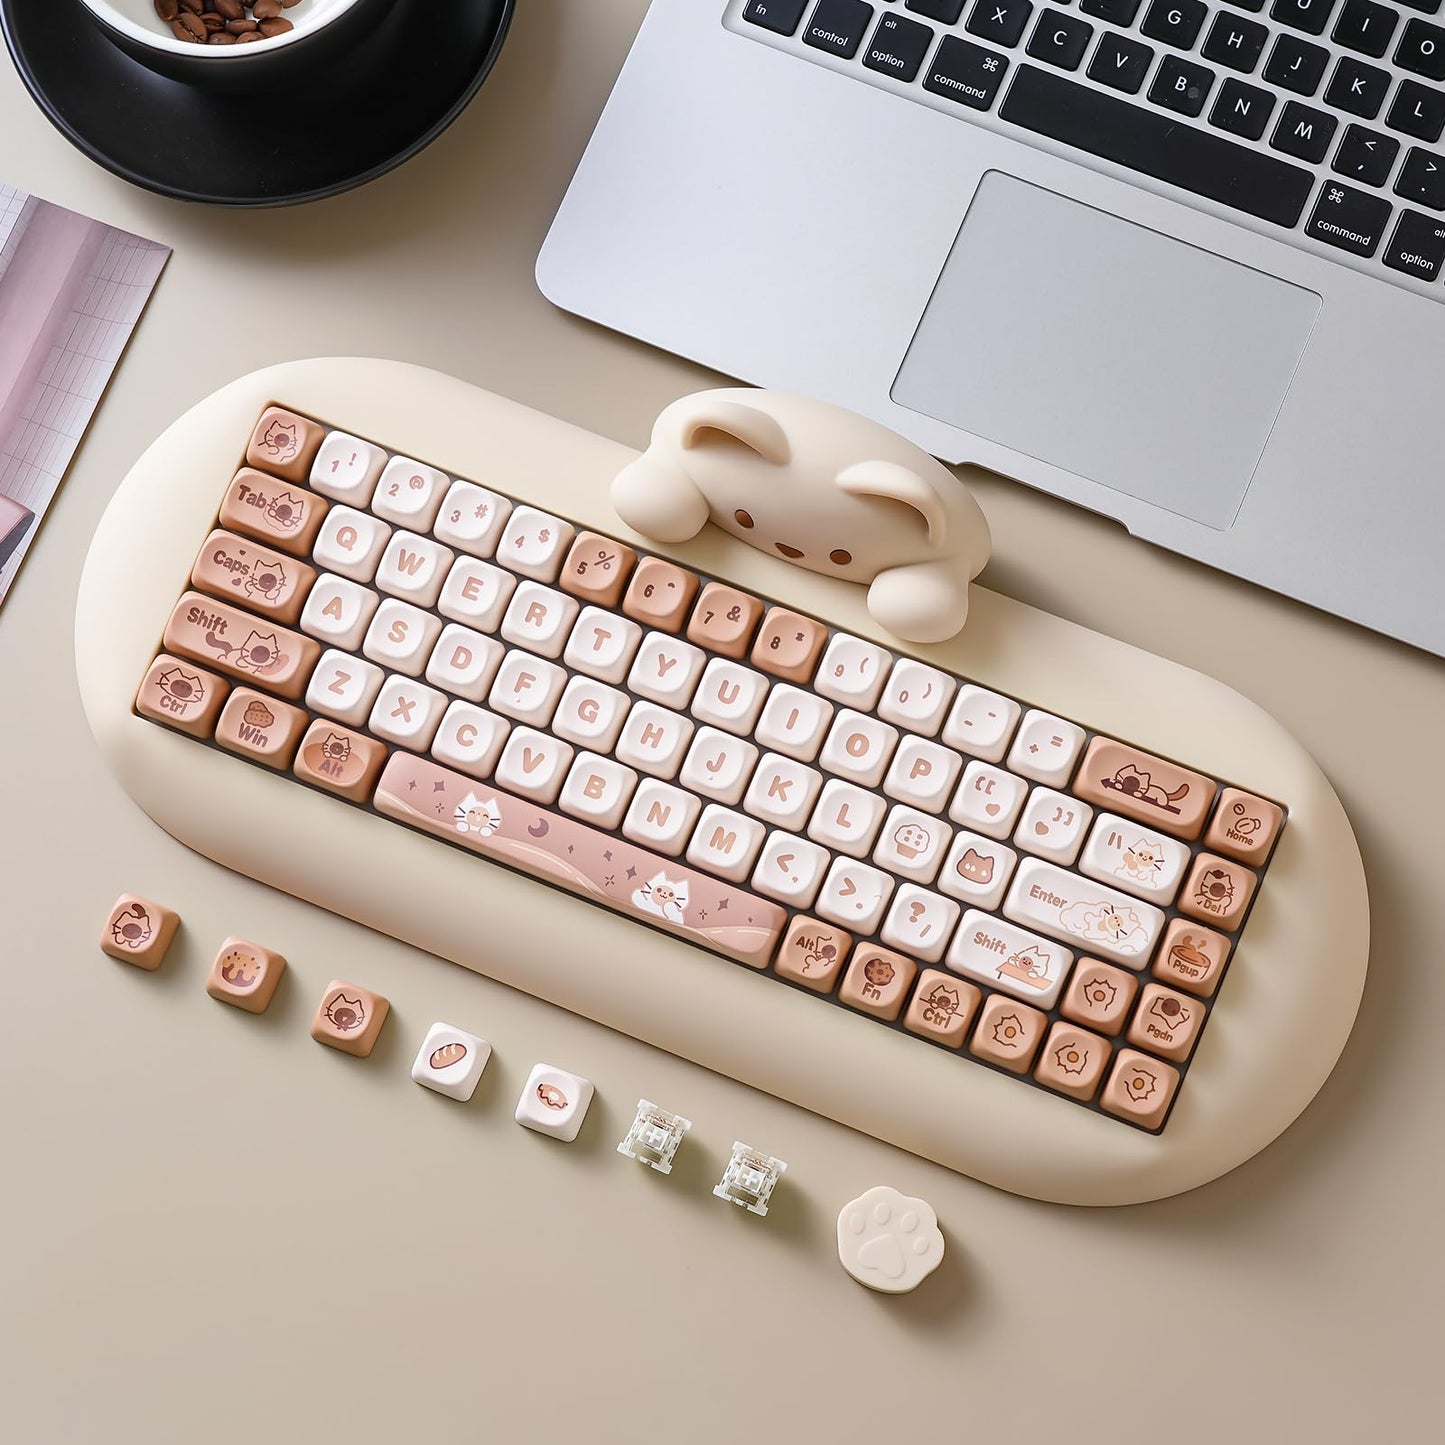 YUNZII C68 Wireless Mechanical Keyboard, 65% Gaming Keyboard Hot Swap,Triple Mode BT5.0/2.4G/Wired,RGB Backlit NKRO,Cute Cat Silicone Ergonomic Keyboard for Win/Mac(Milk Switch,Brown)